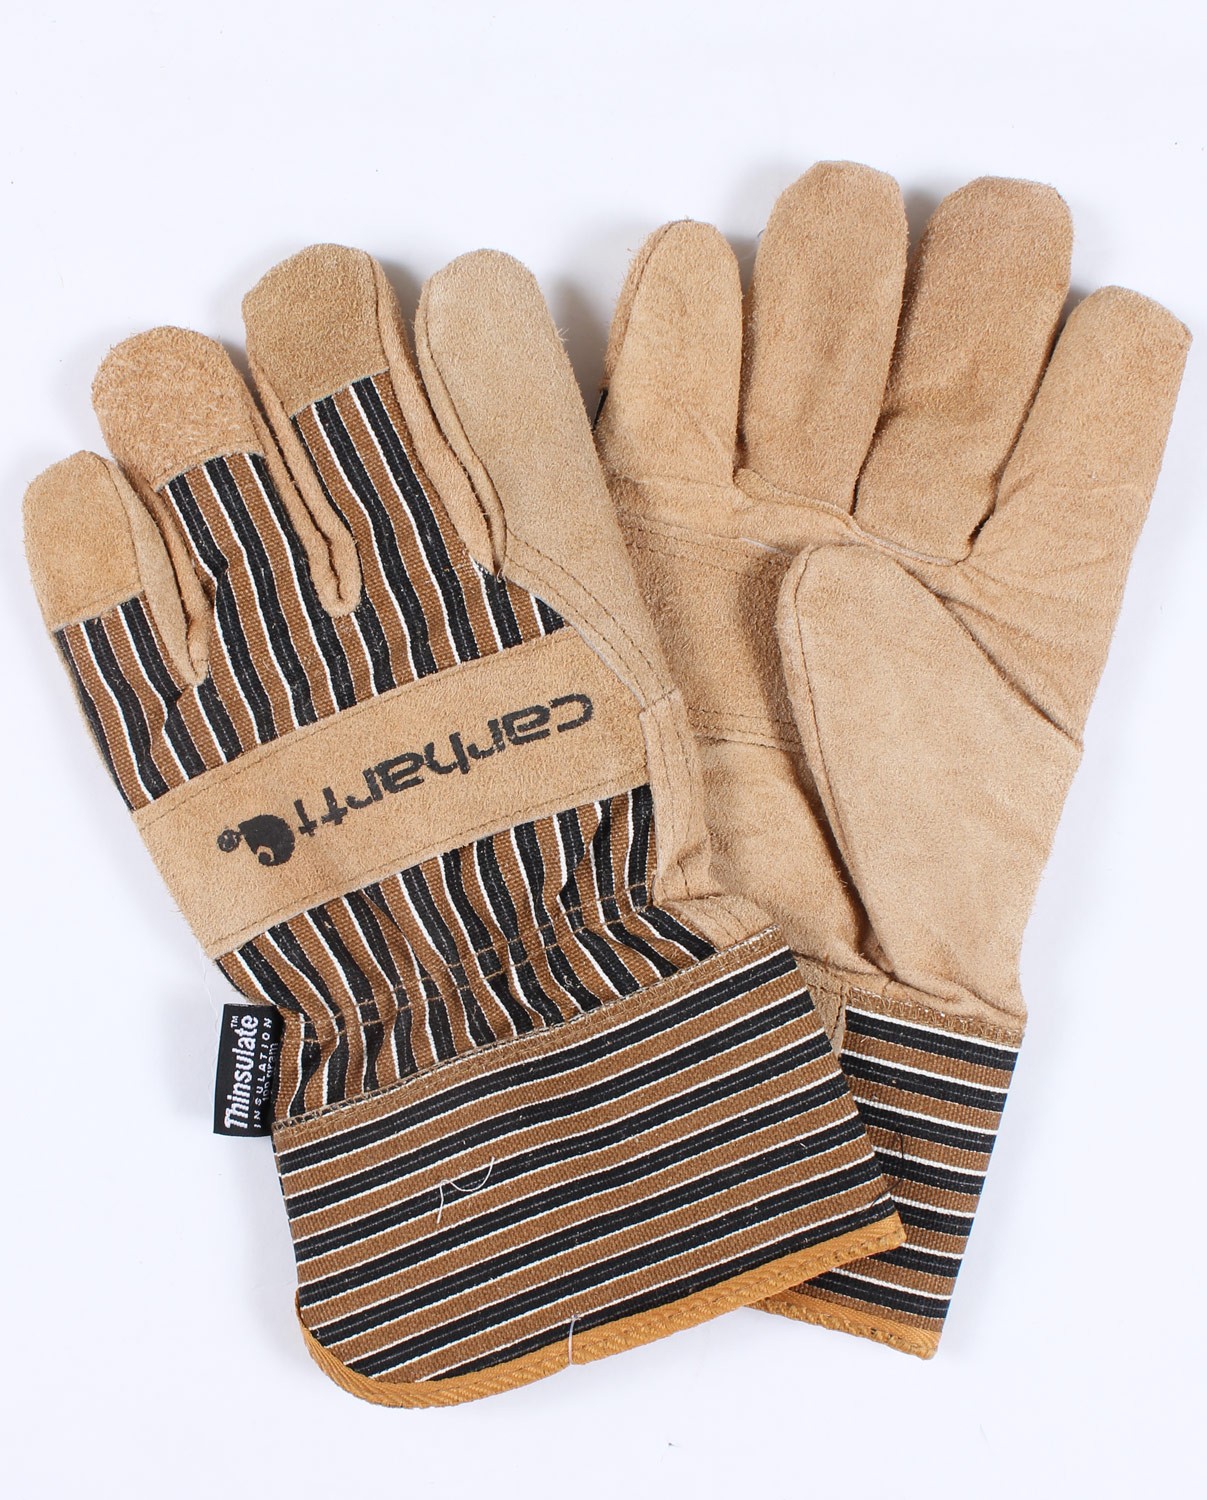 Carhartt Mens Insulated Suede Work Glove with Safety Cuff Carhartt Men's Gloves A515